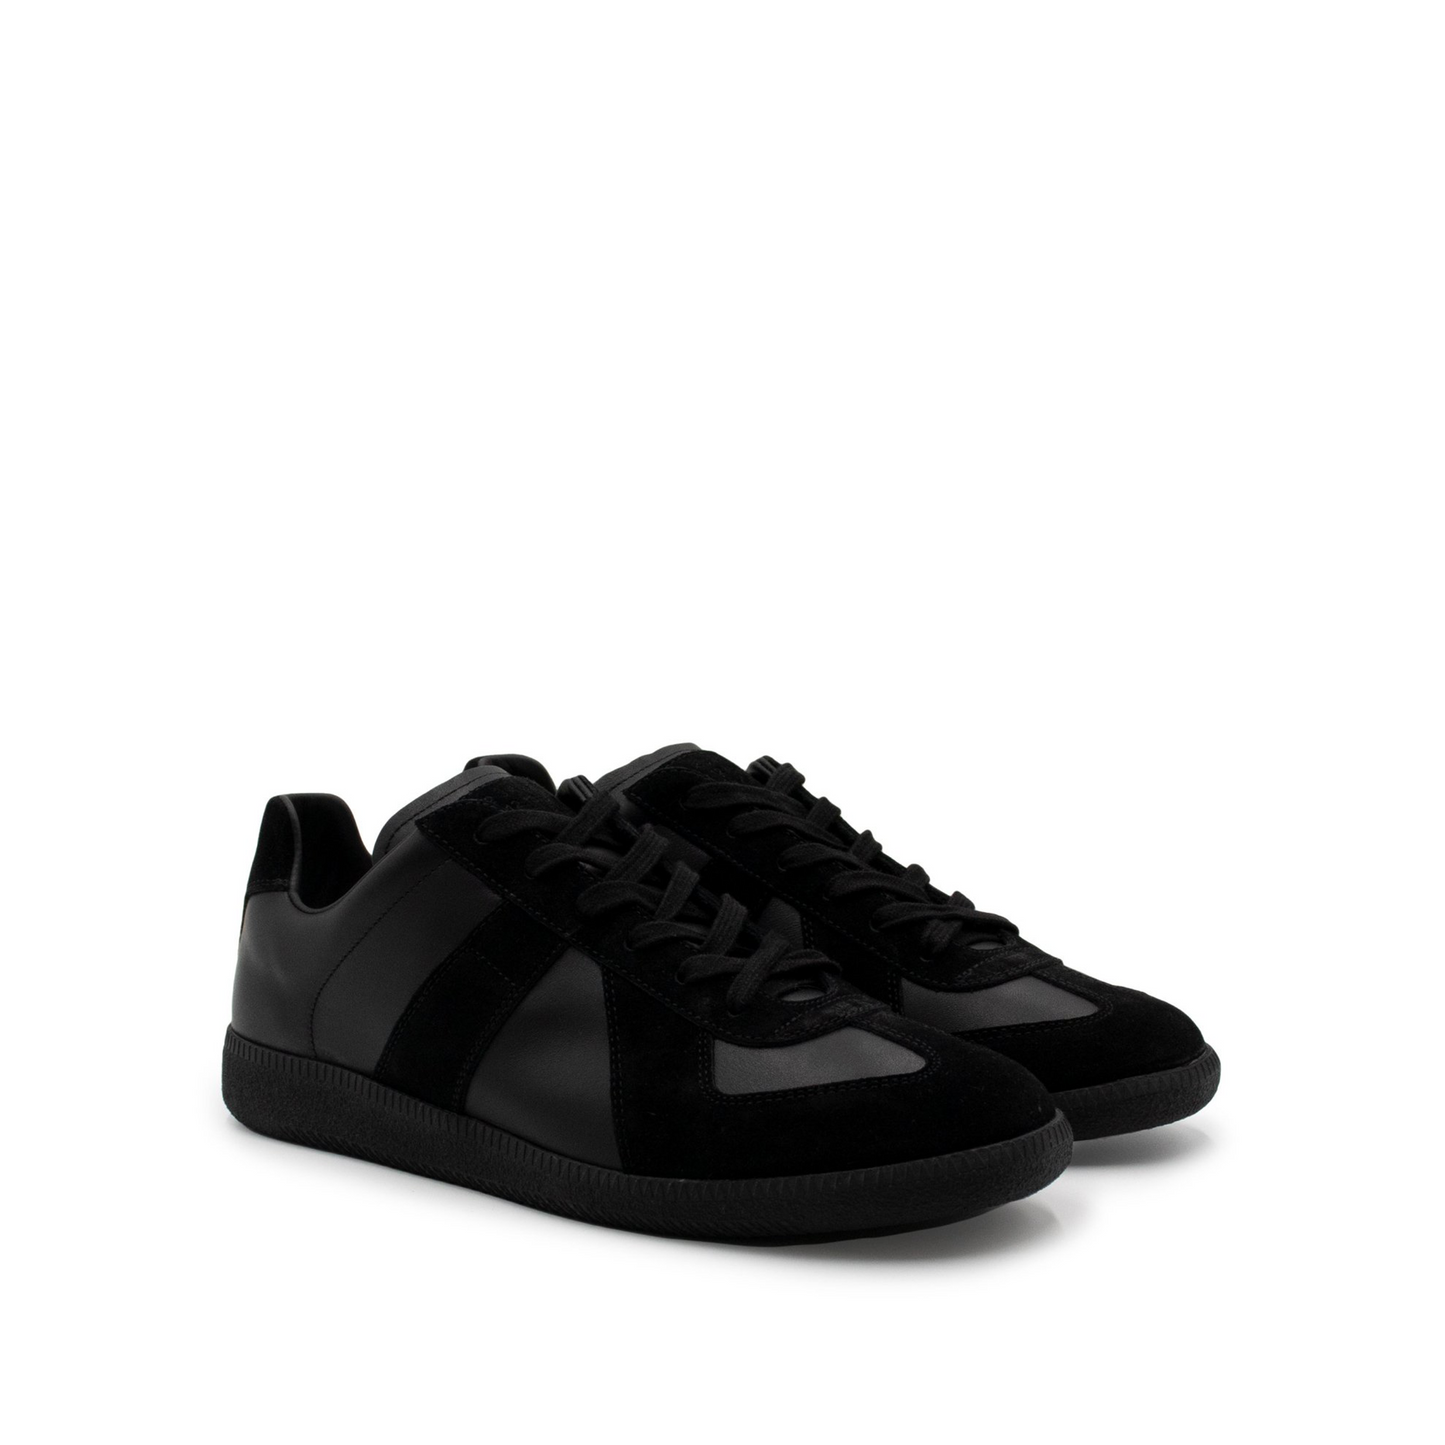 Replica Leather Sneakers in Black